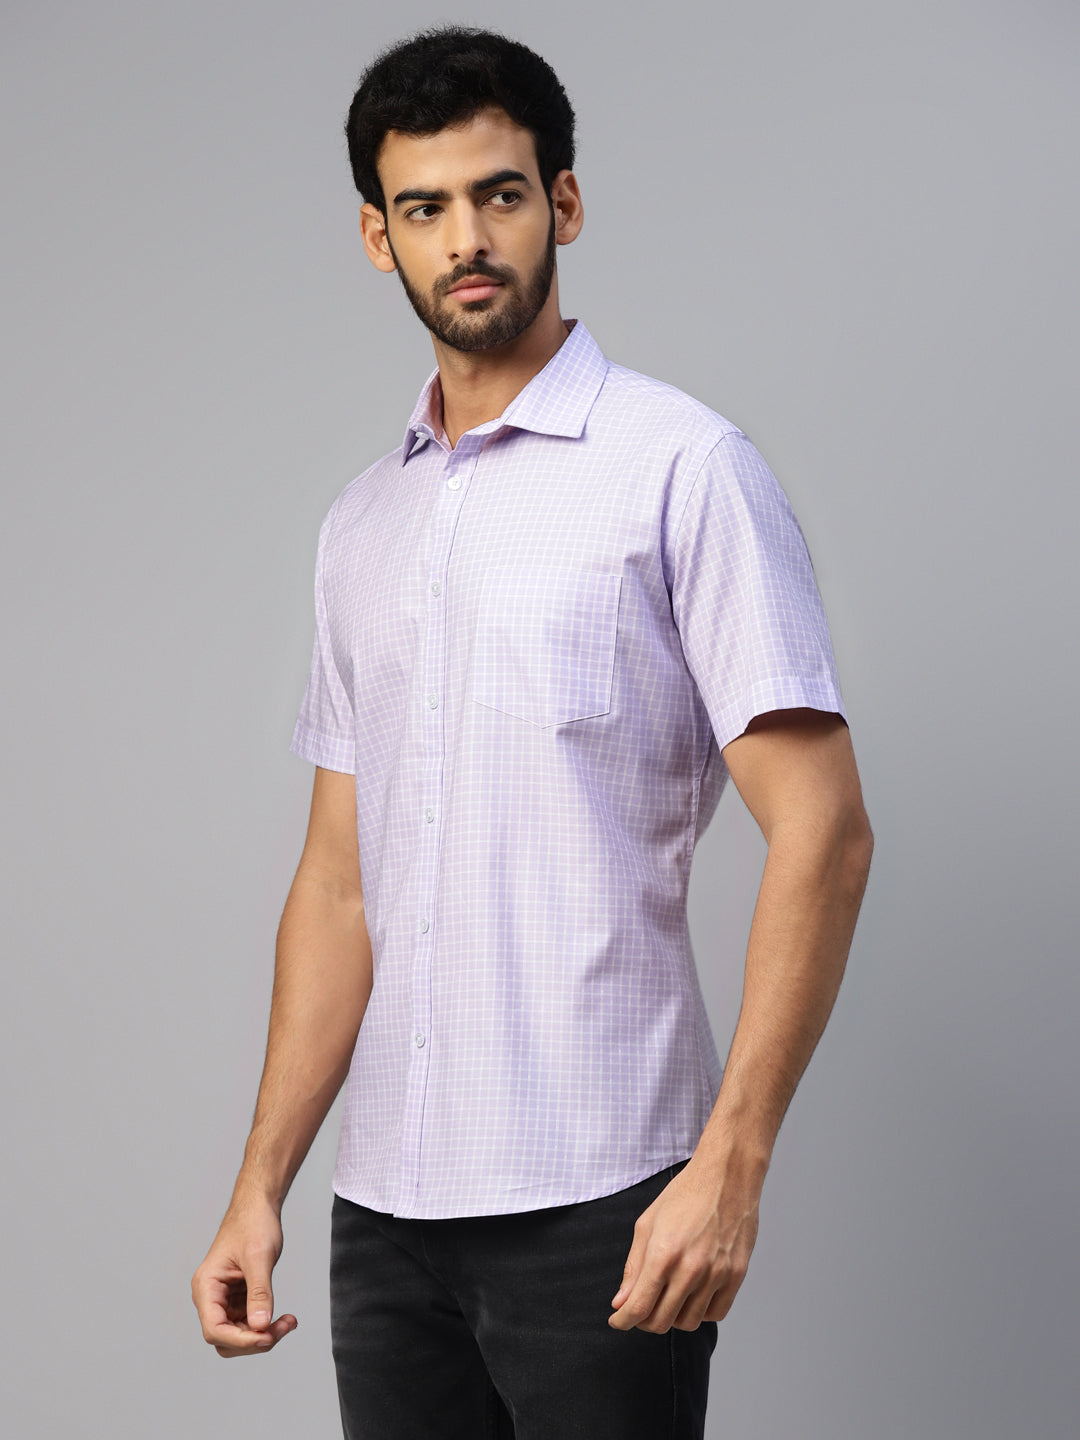 Don Vino Men's Lavender Shirt with Small Checks